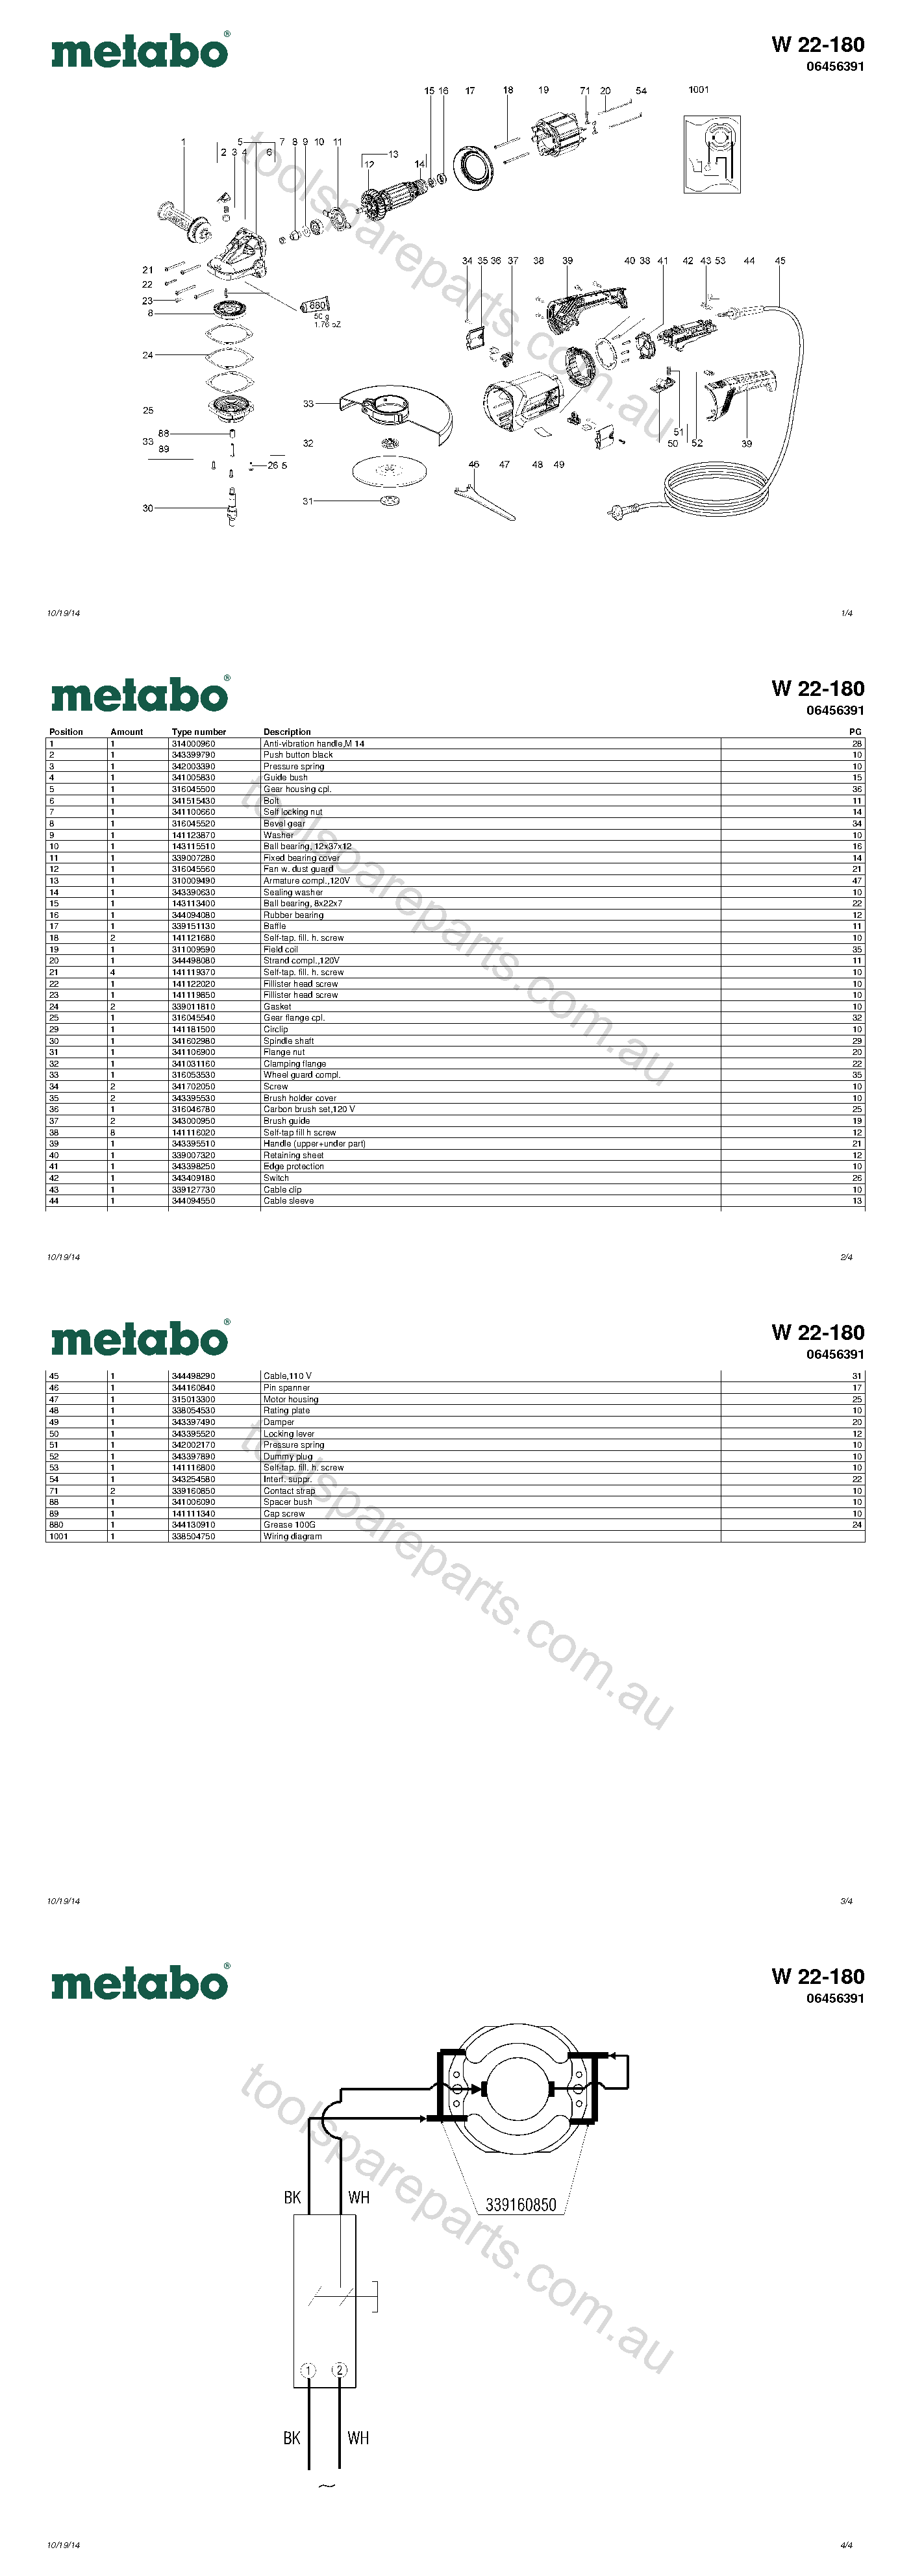 Metabo W 22-180 06456391  Diagram 1